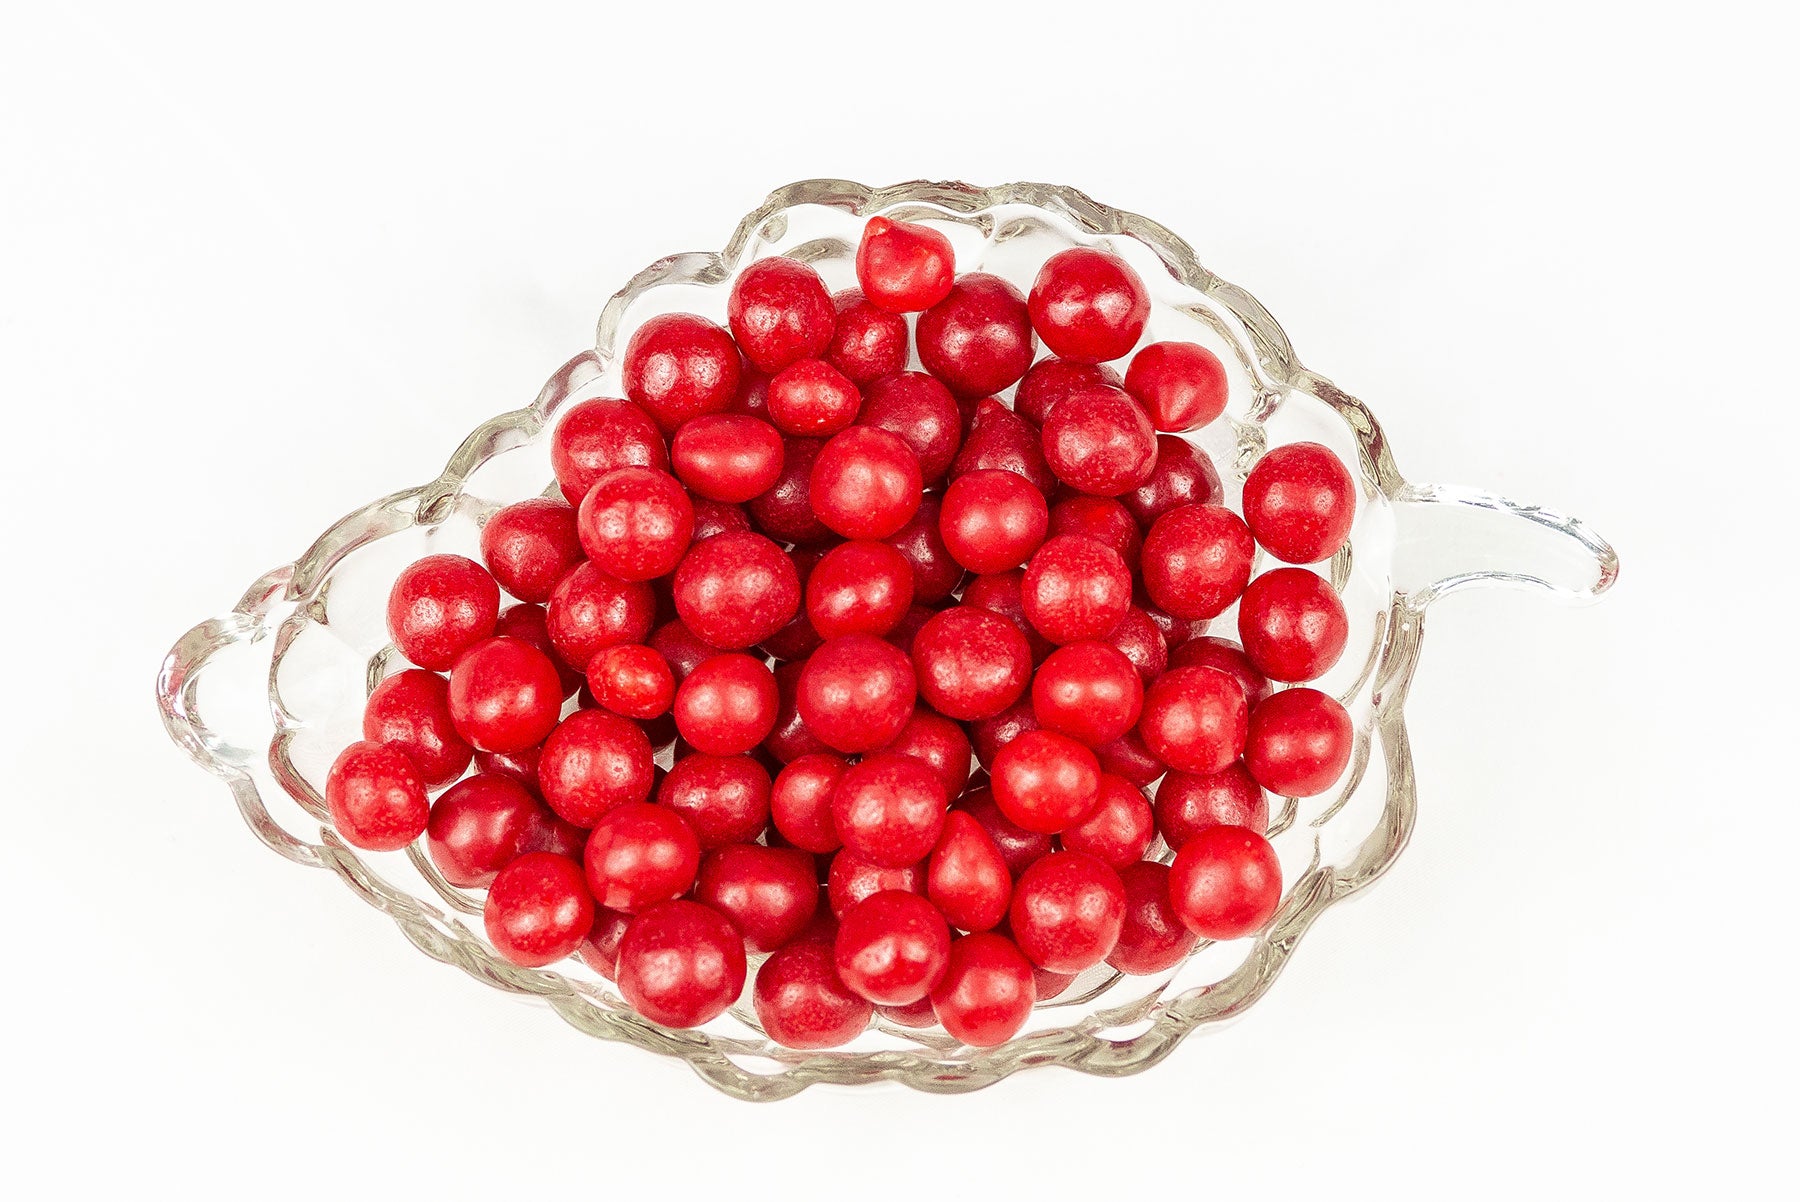 Cherry Sours